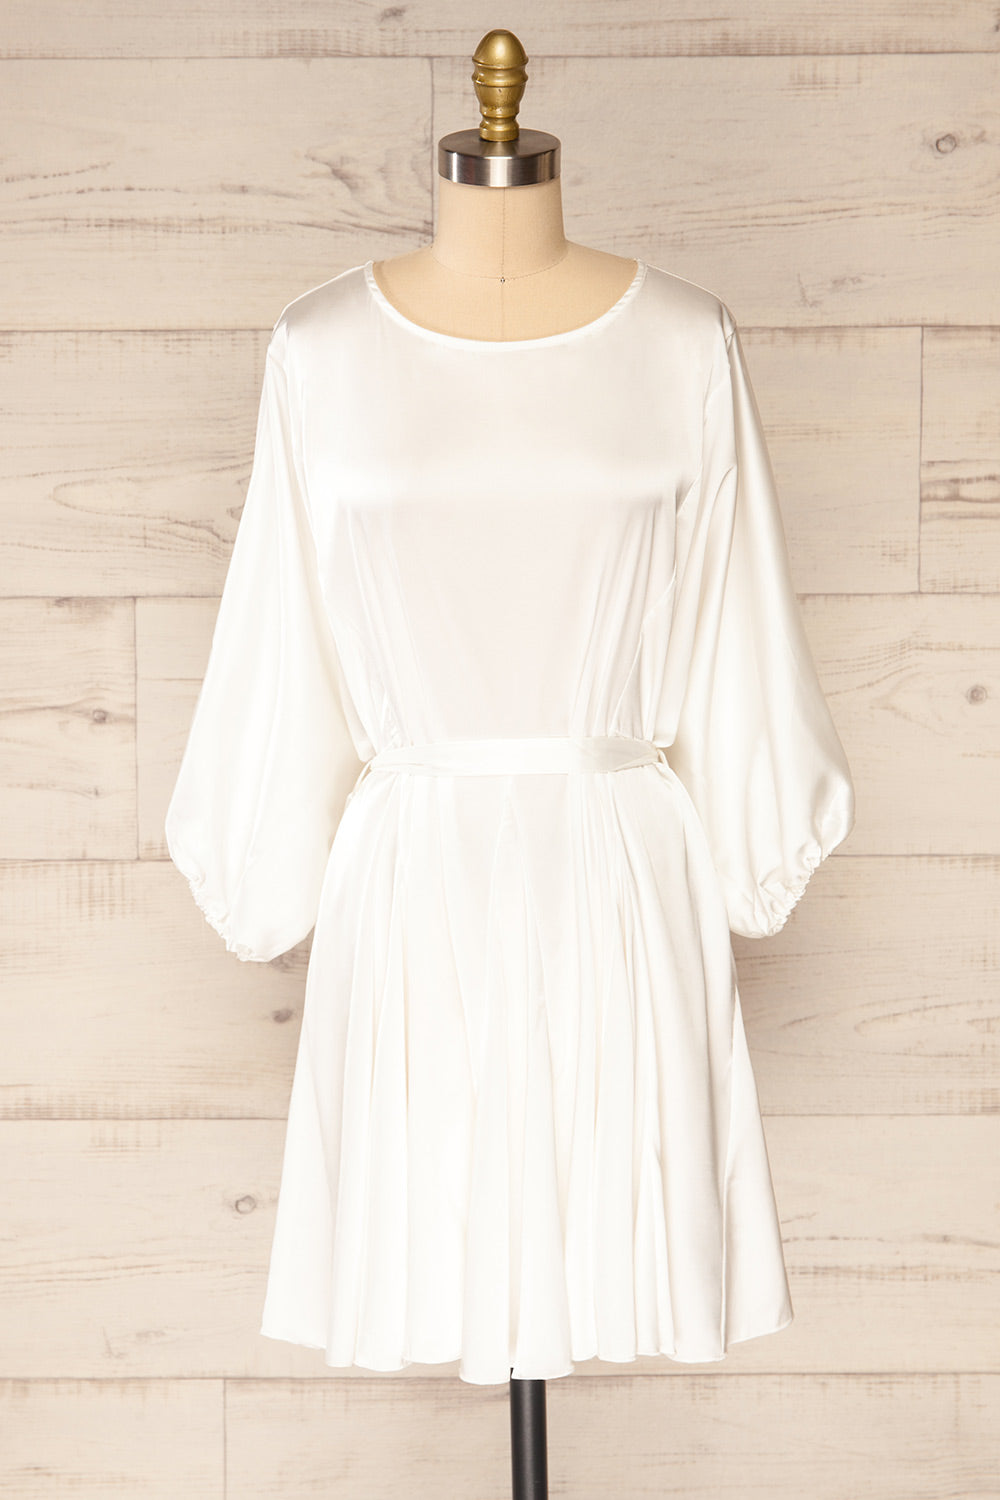 Isobel White Short Satin Dress with 3/4 Sleeves | La petite garçonne front view